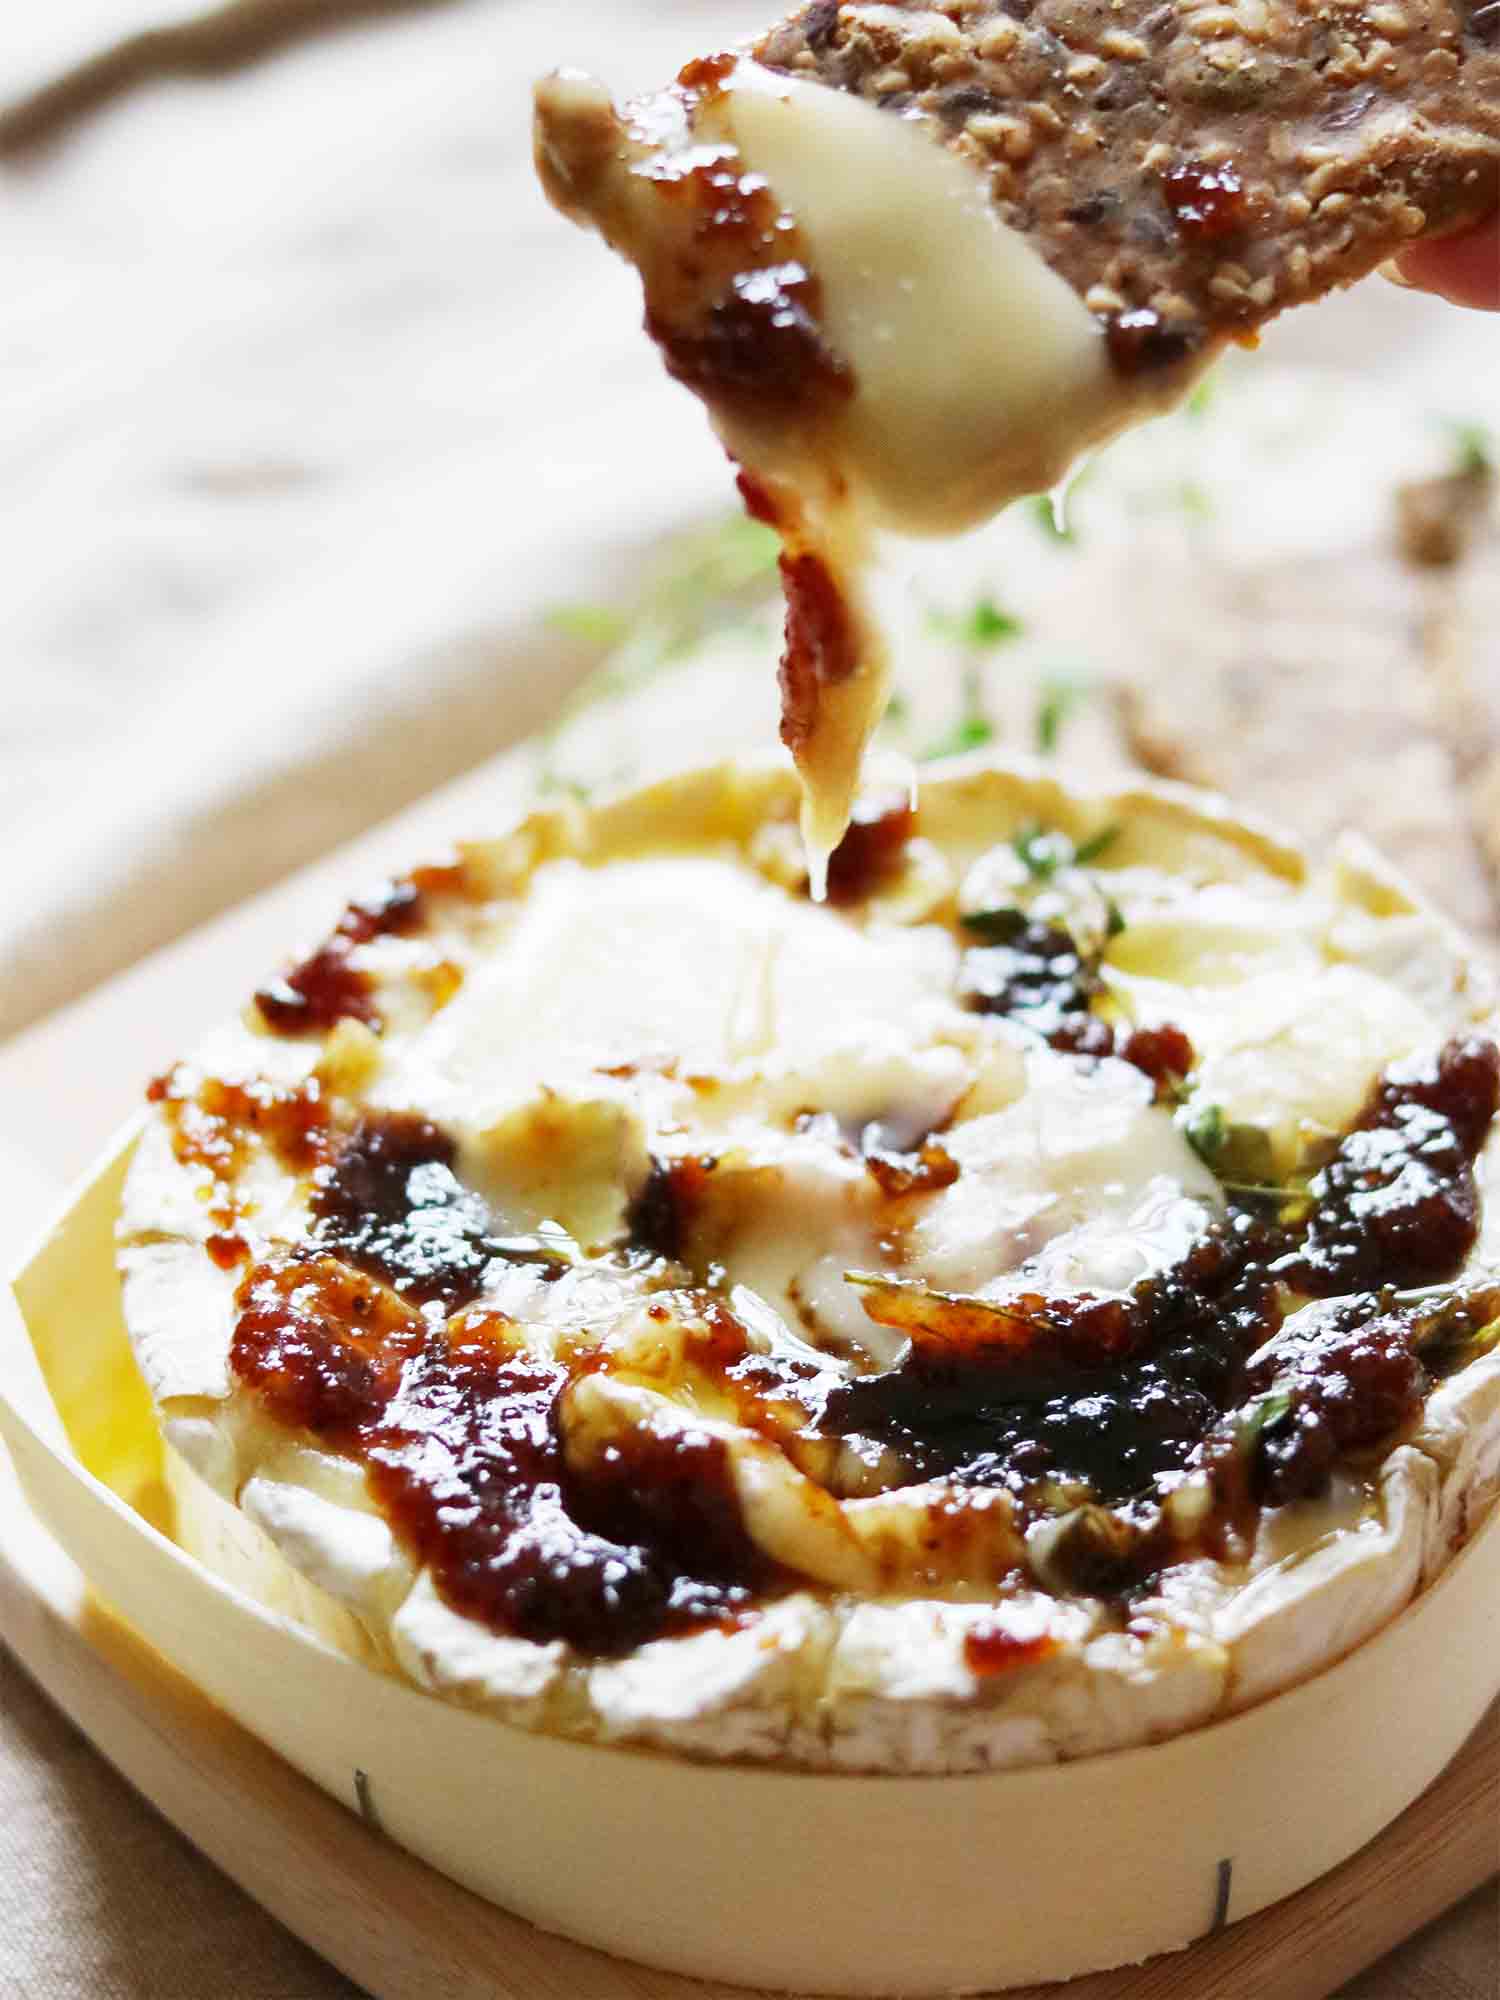 Recipe: Baked Camembert with savory jam